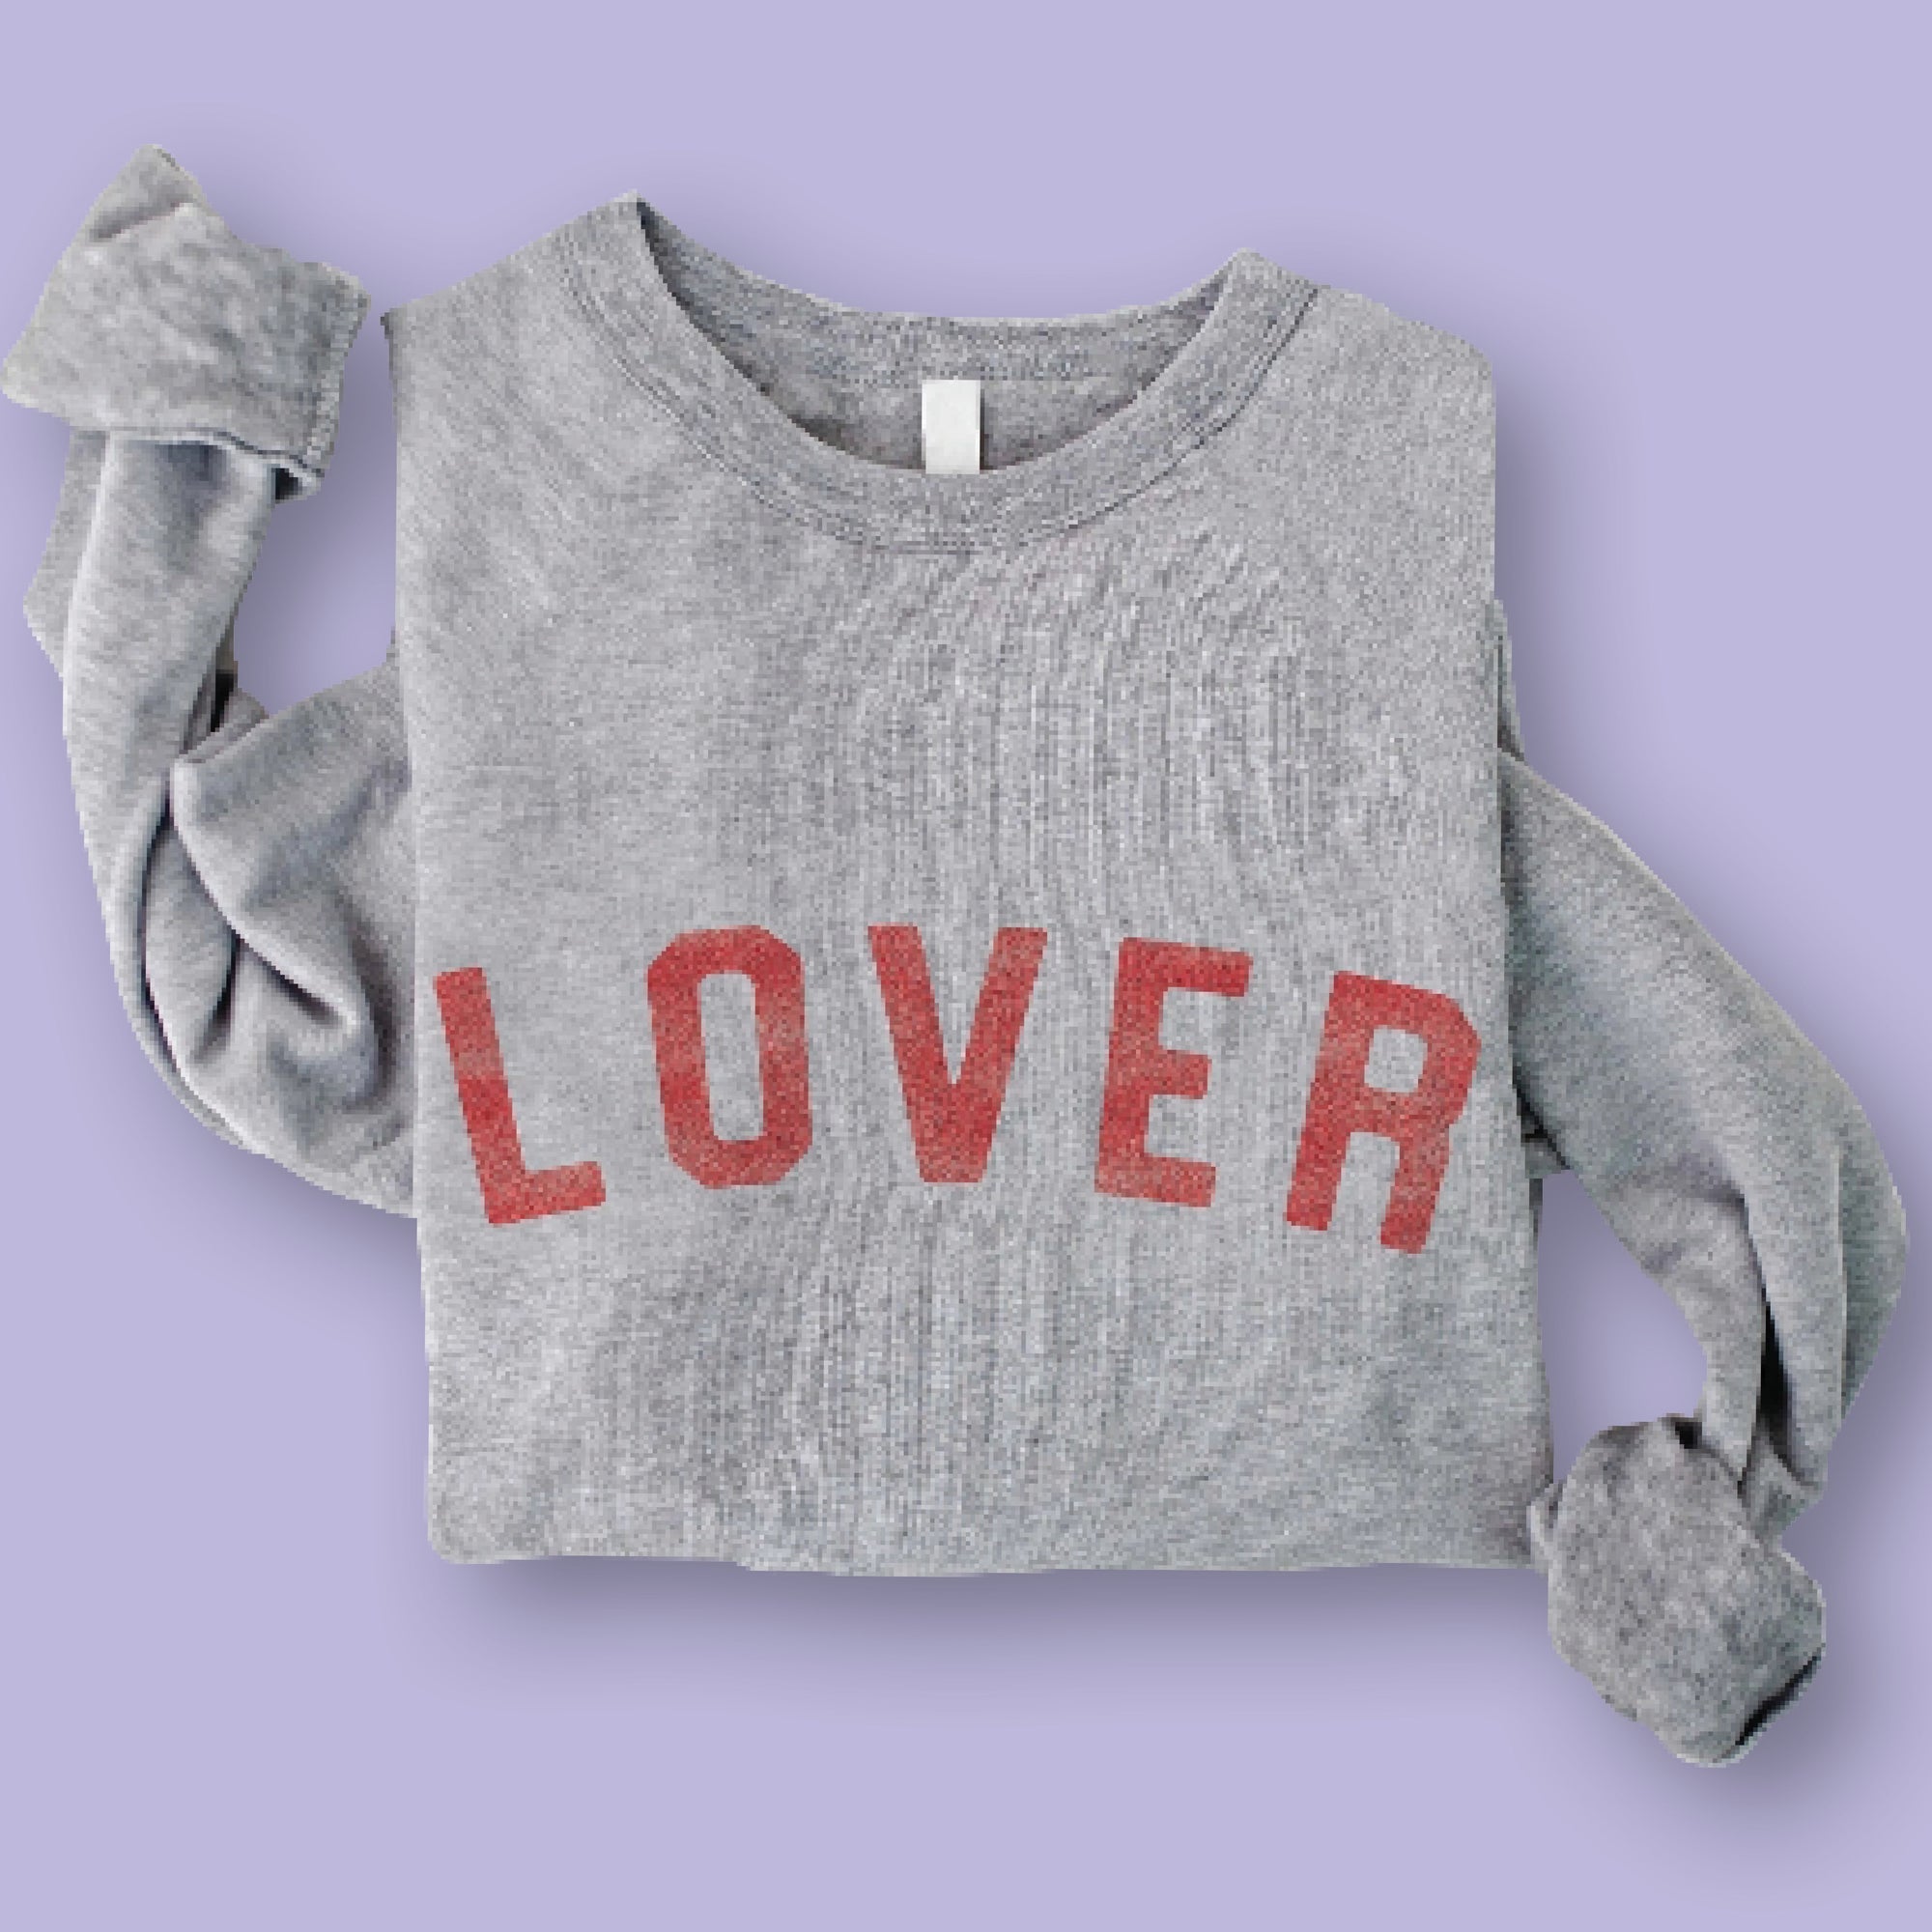 LOVER Graphic Sweatshirt